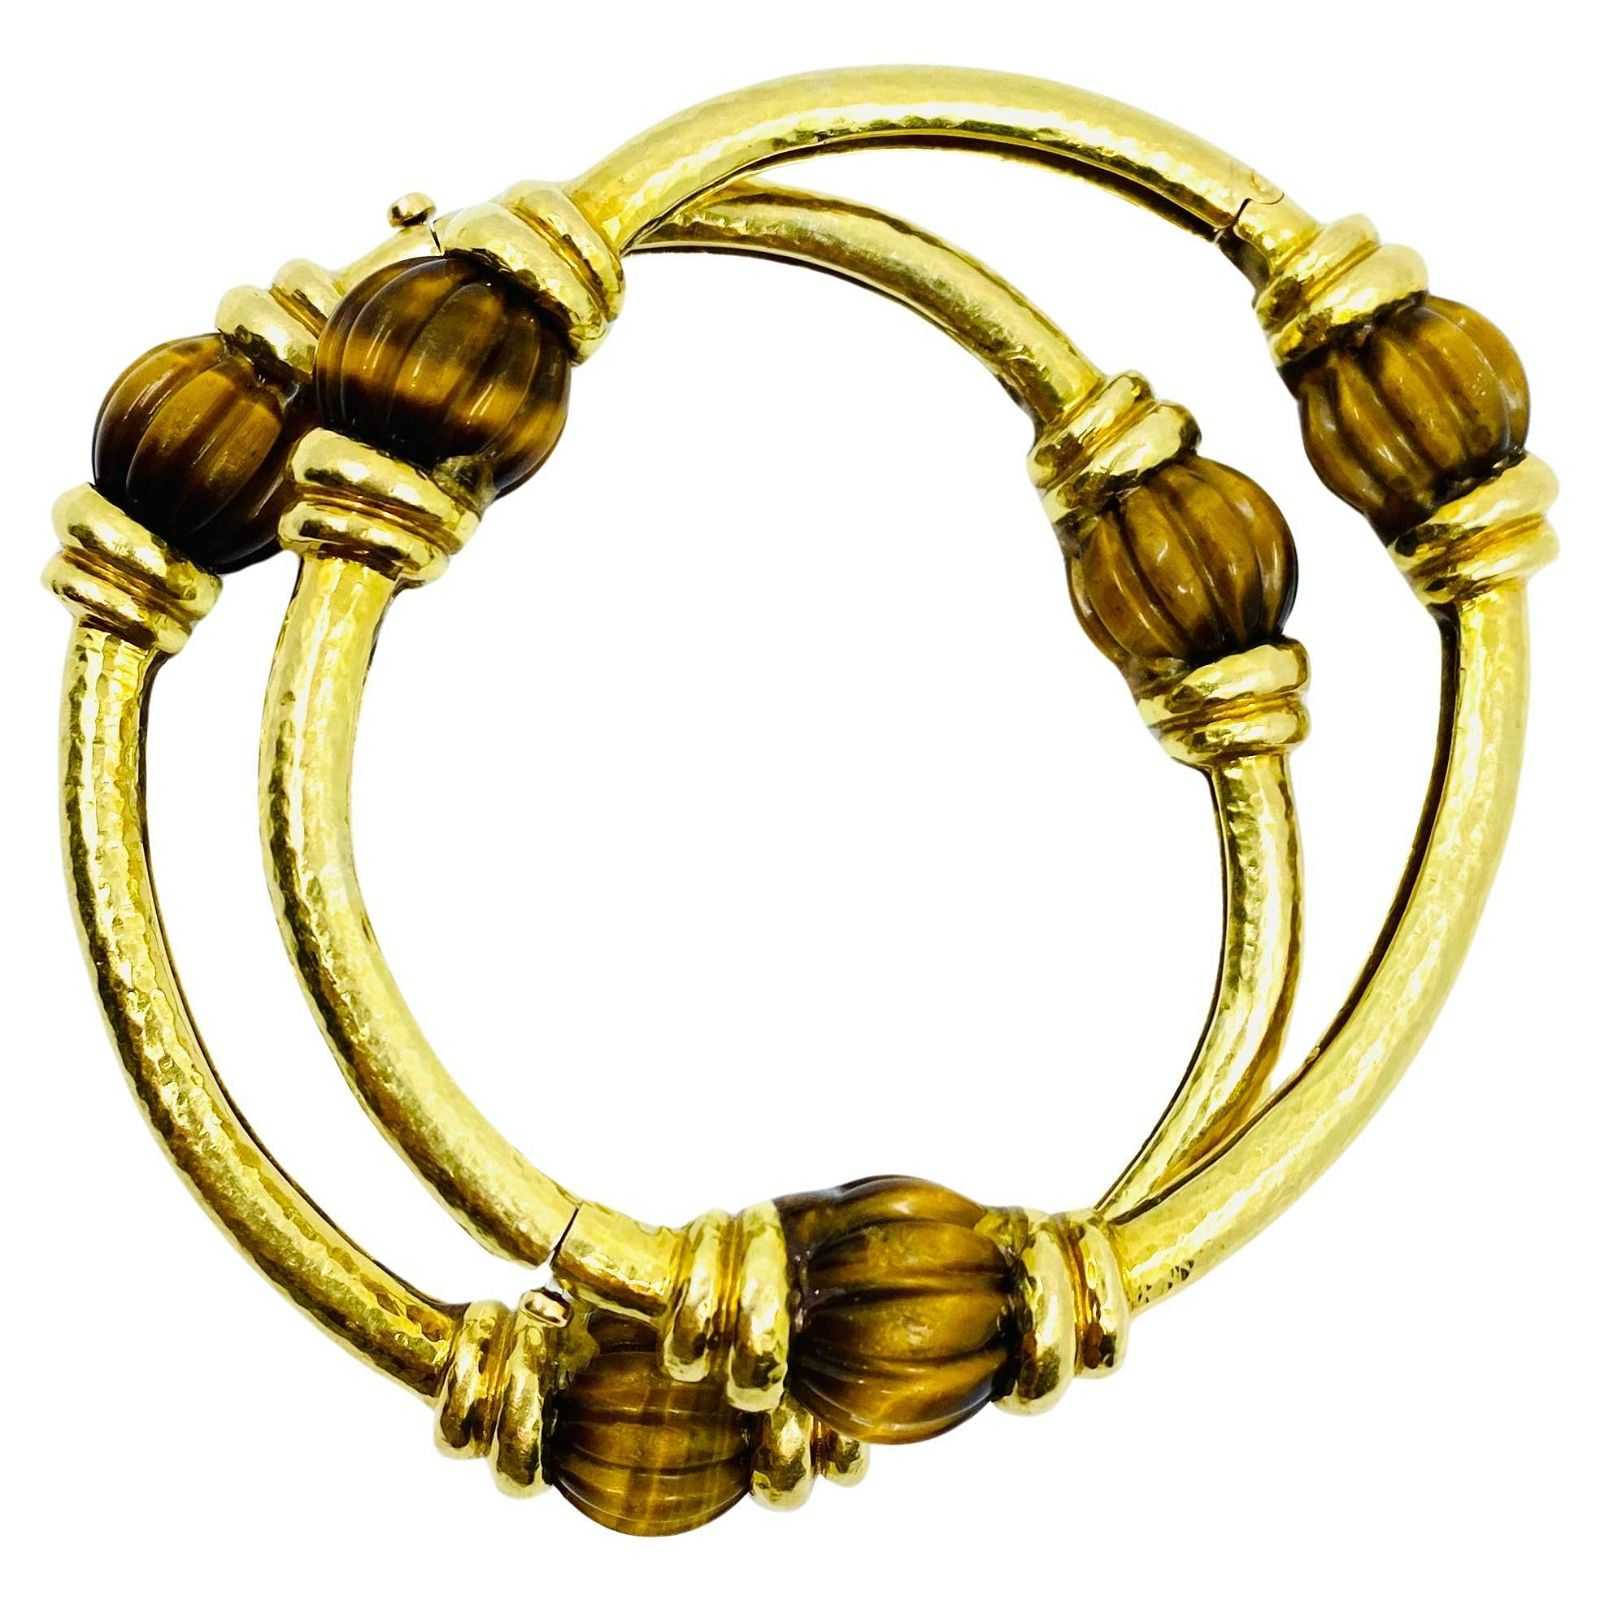 Pair of 18K gold and tiger’s eye bracelets by David Webb, estimated at $32,000-$38,000 at Jasper52.